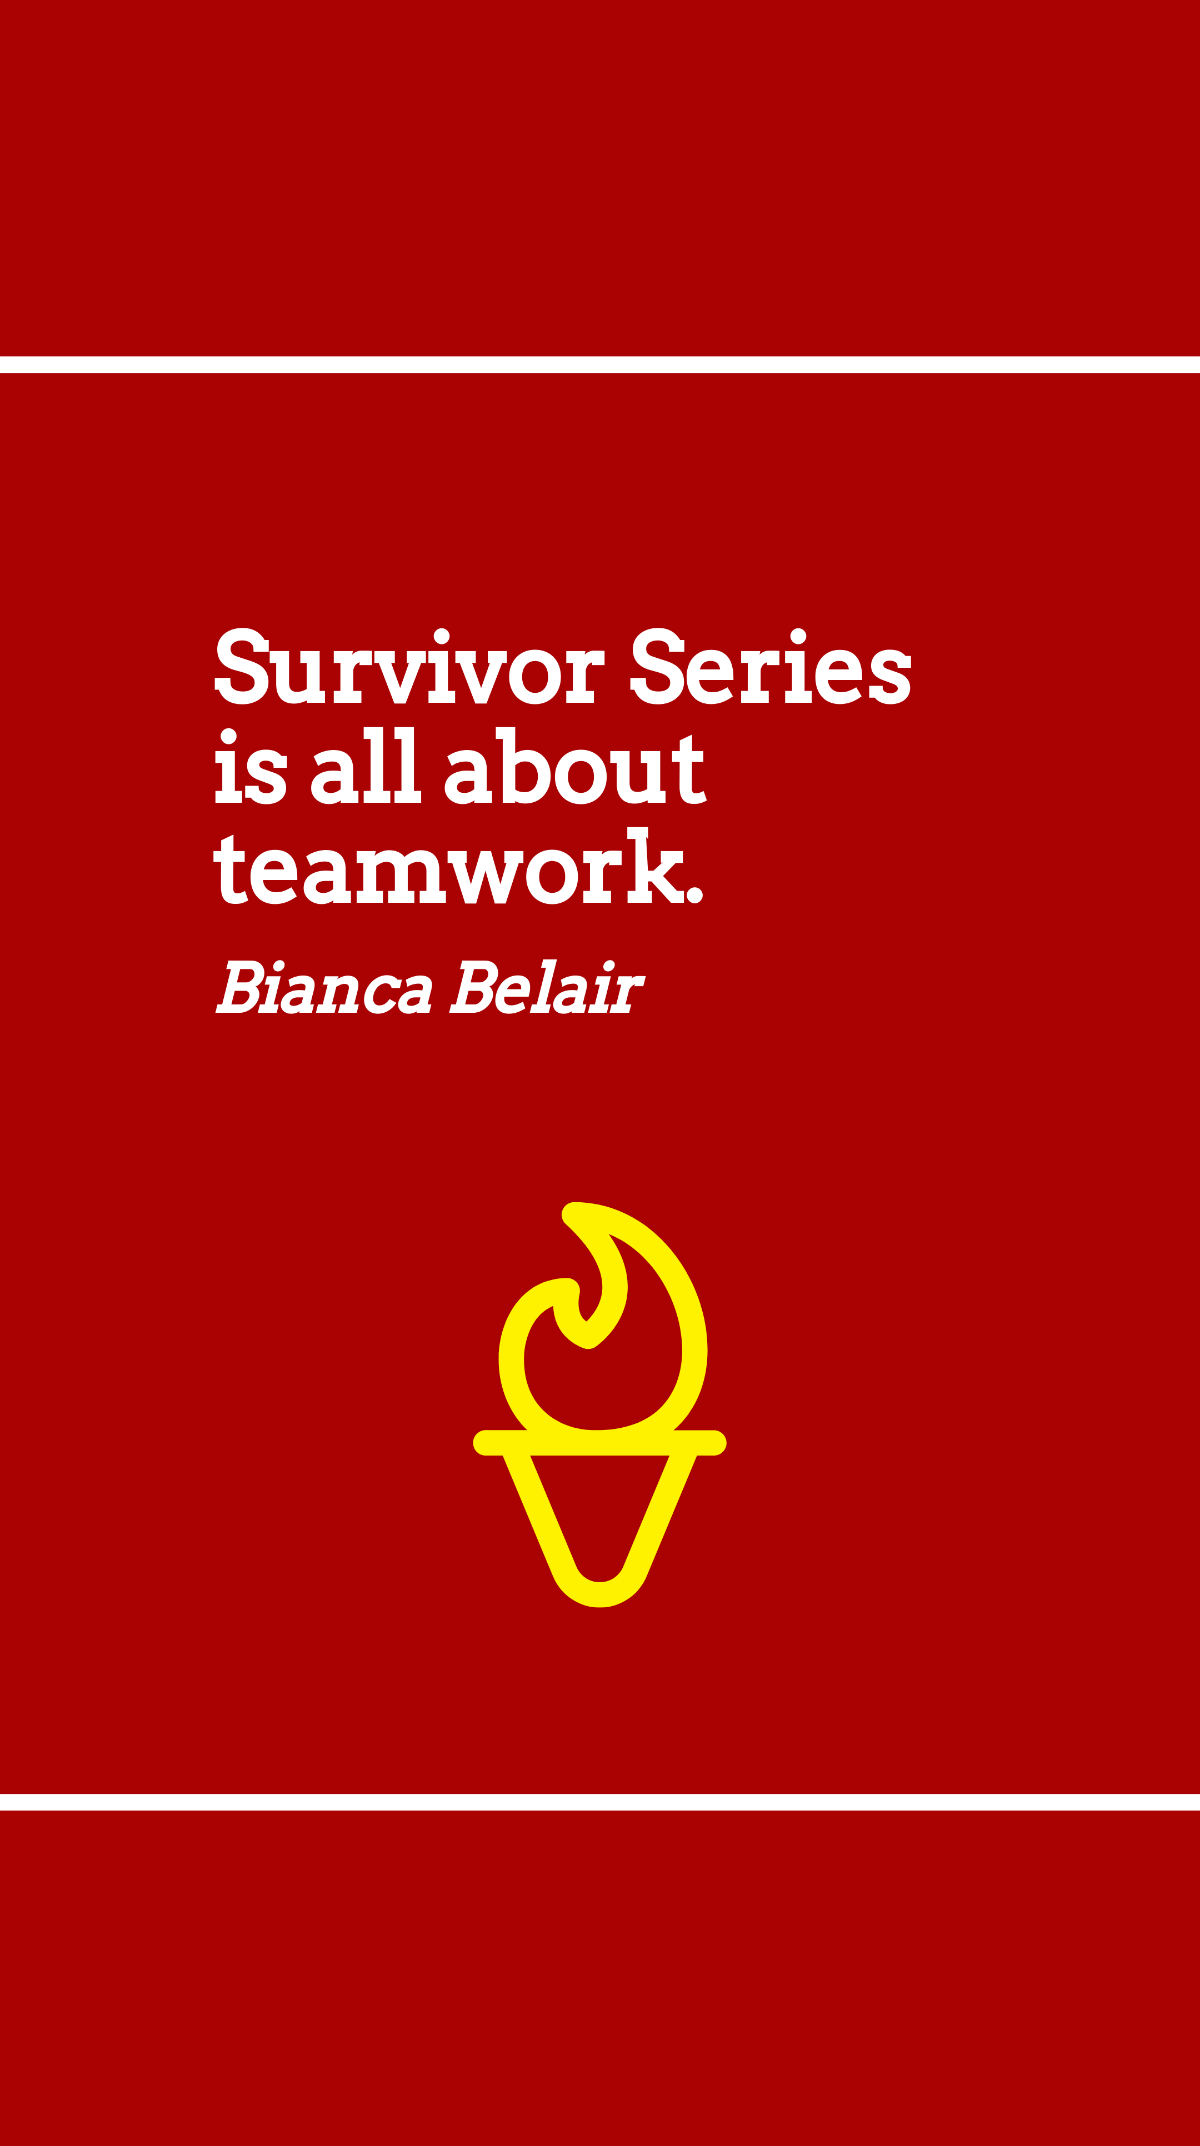 Bianca Belair - Survivor Series is all about teamwork.